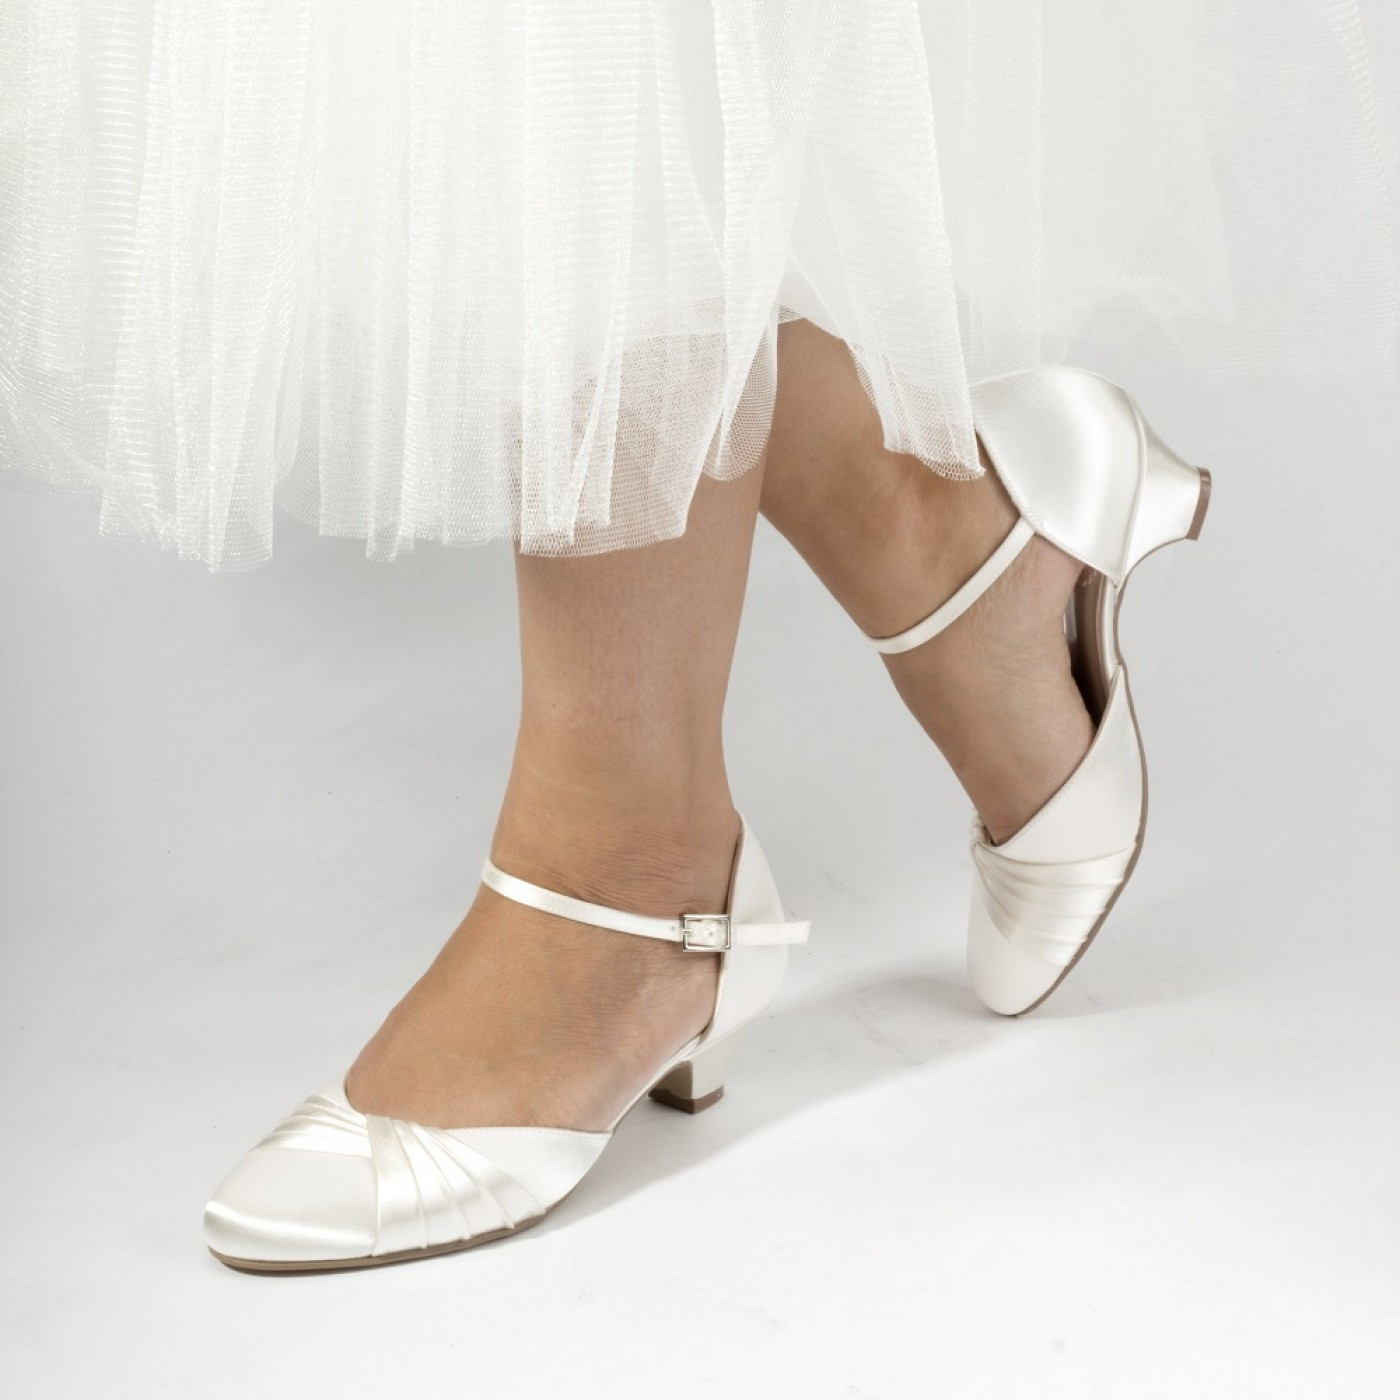 Ivory Satin Wedding Shoes
 Pink Paradox Protea Dyeable Ivory Satin Low Heel Wedding